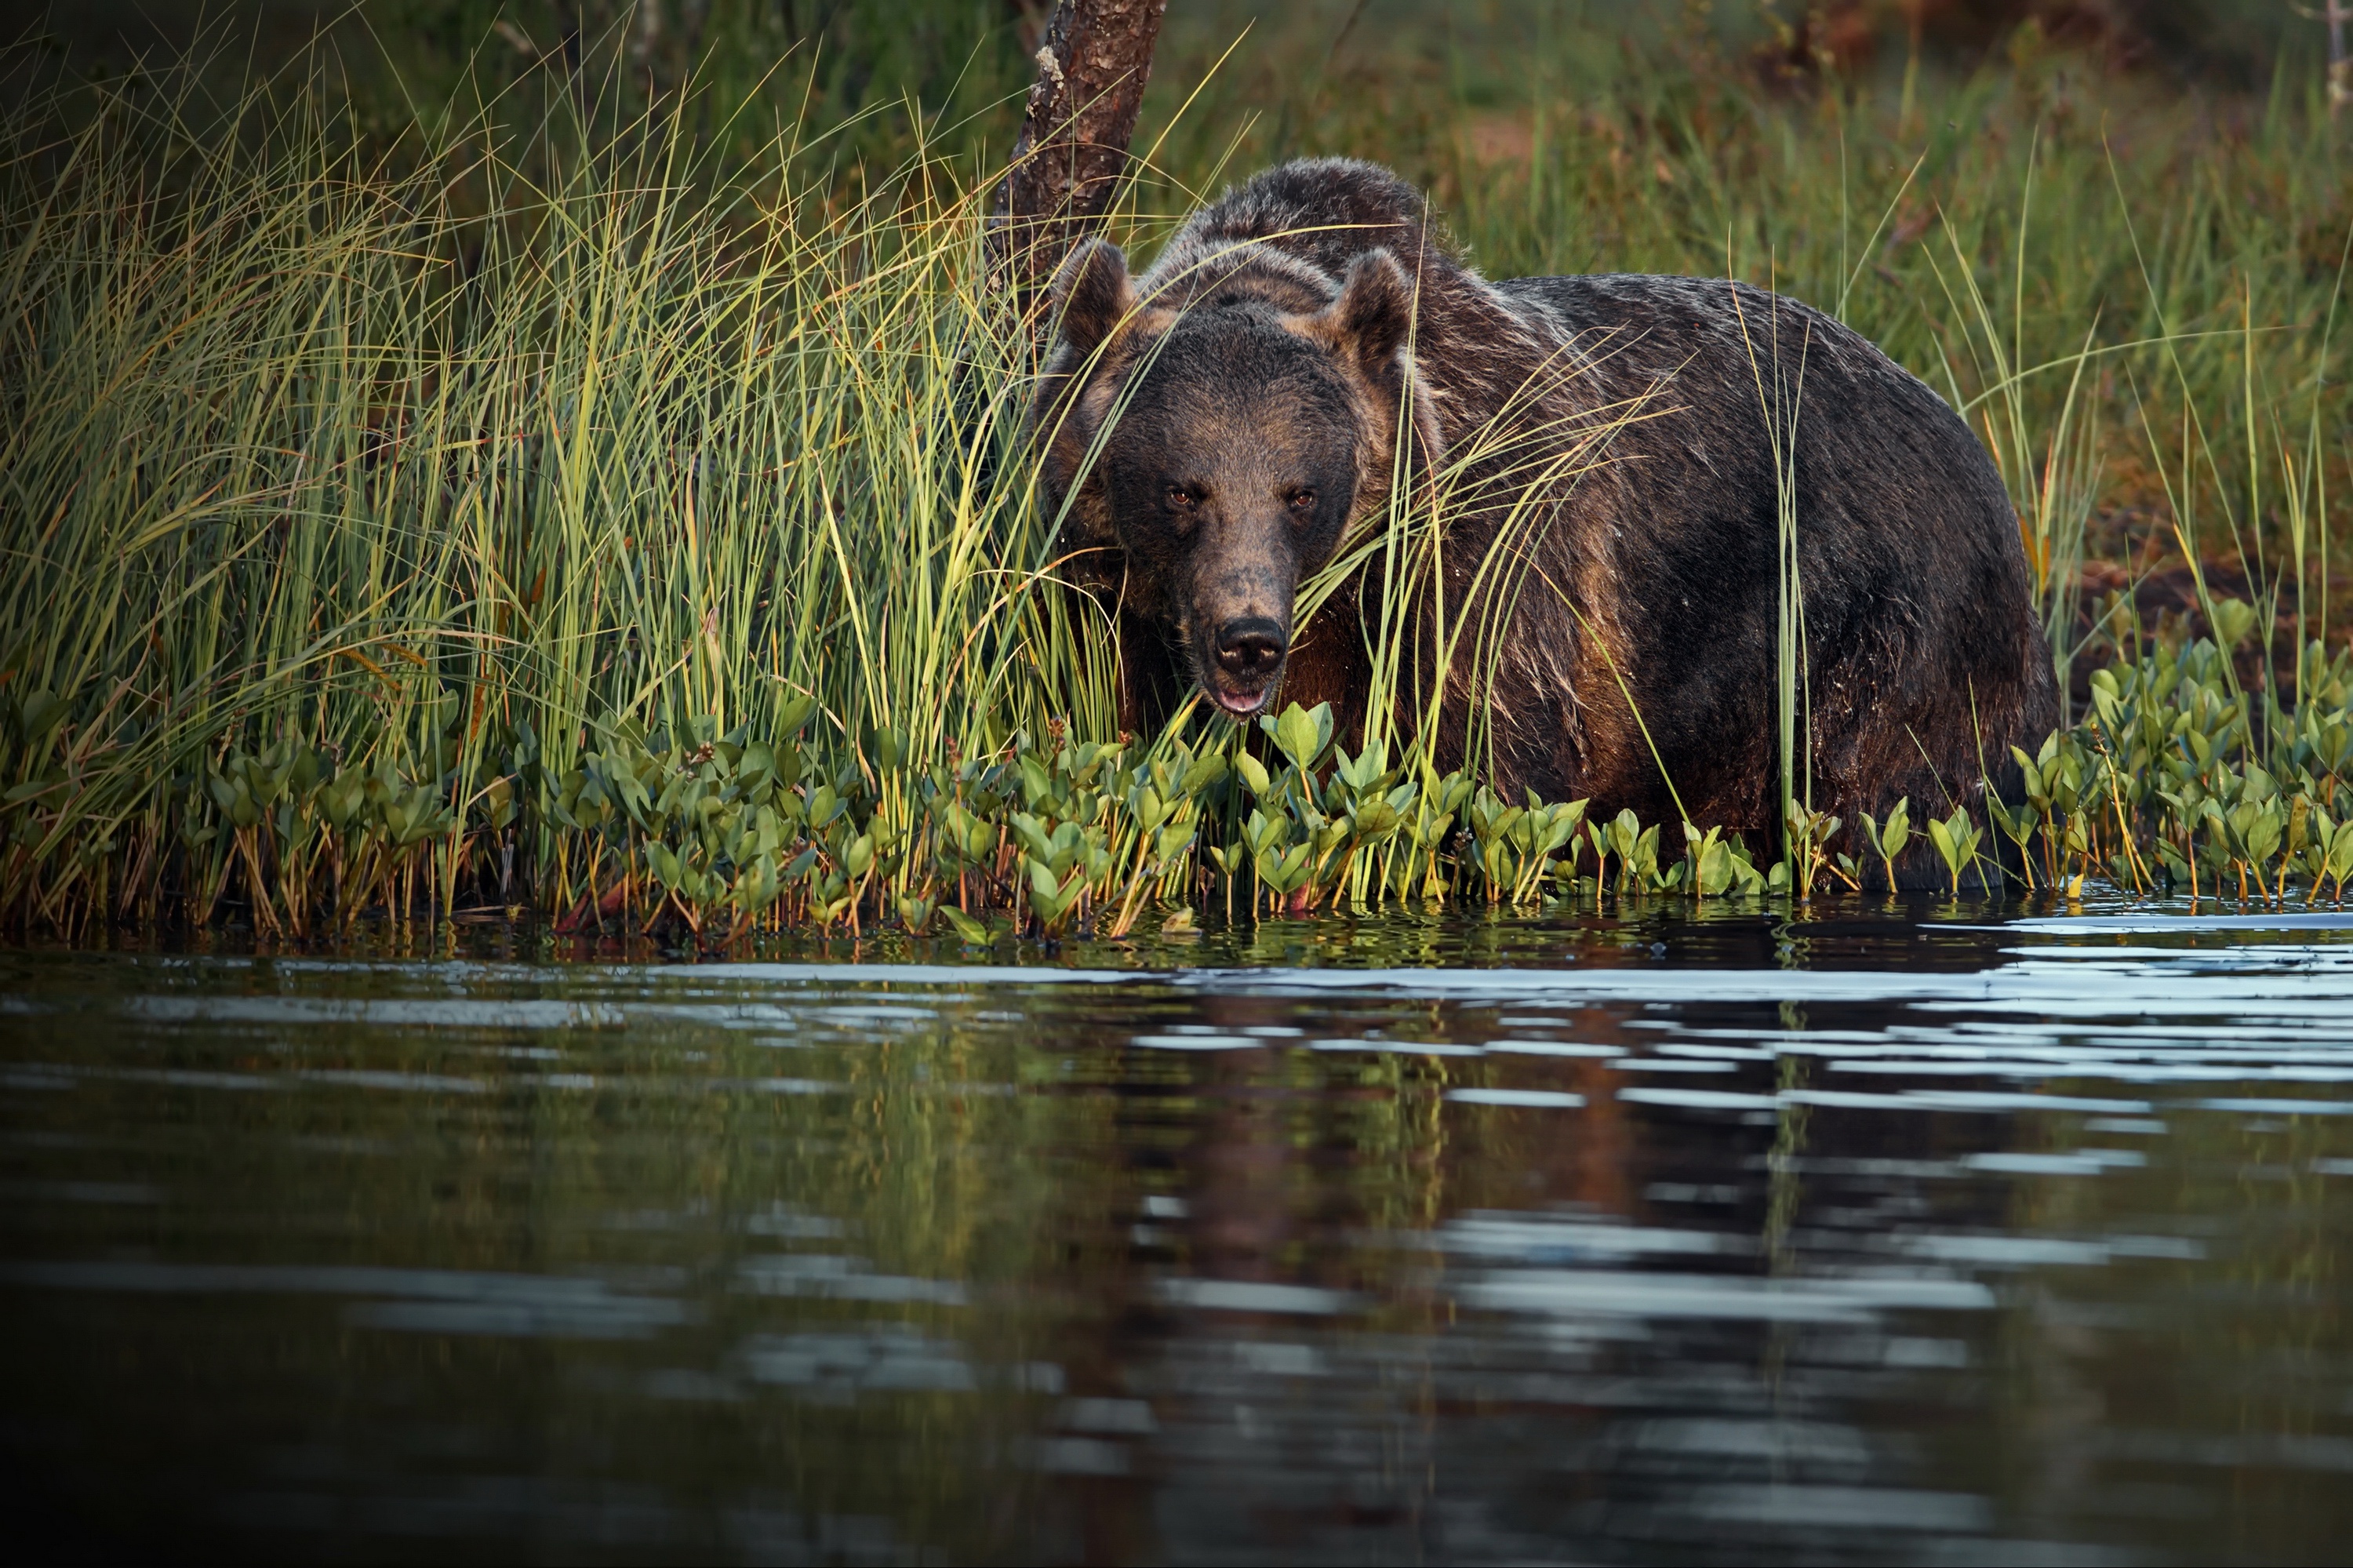 Bear HD Wallpapers Background Images. predator (Animal) HD Wallpapers Backg...